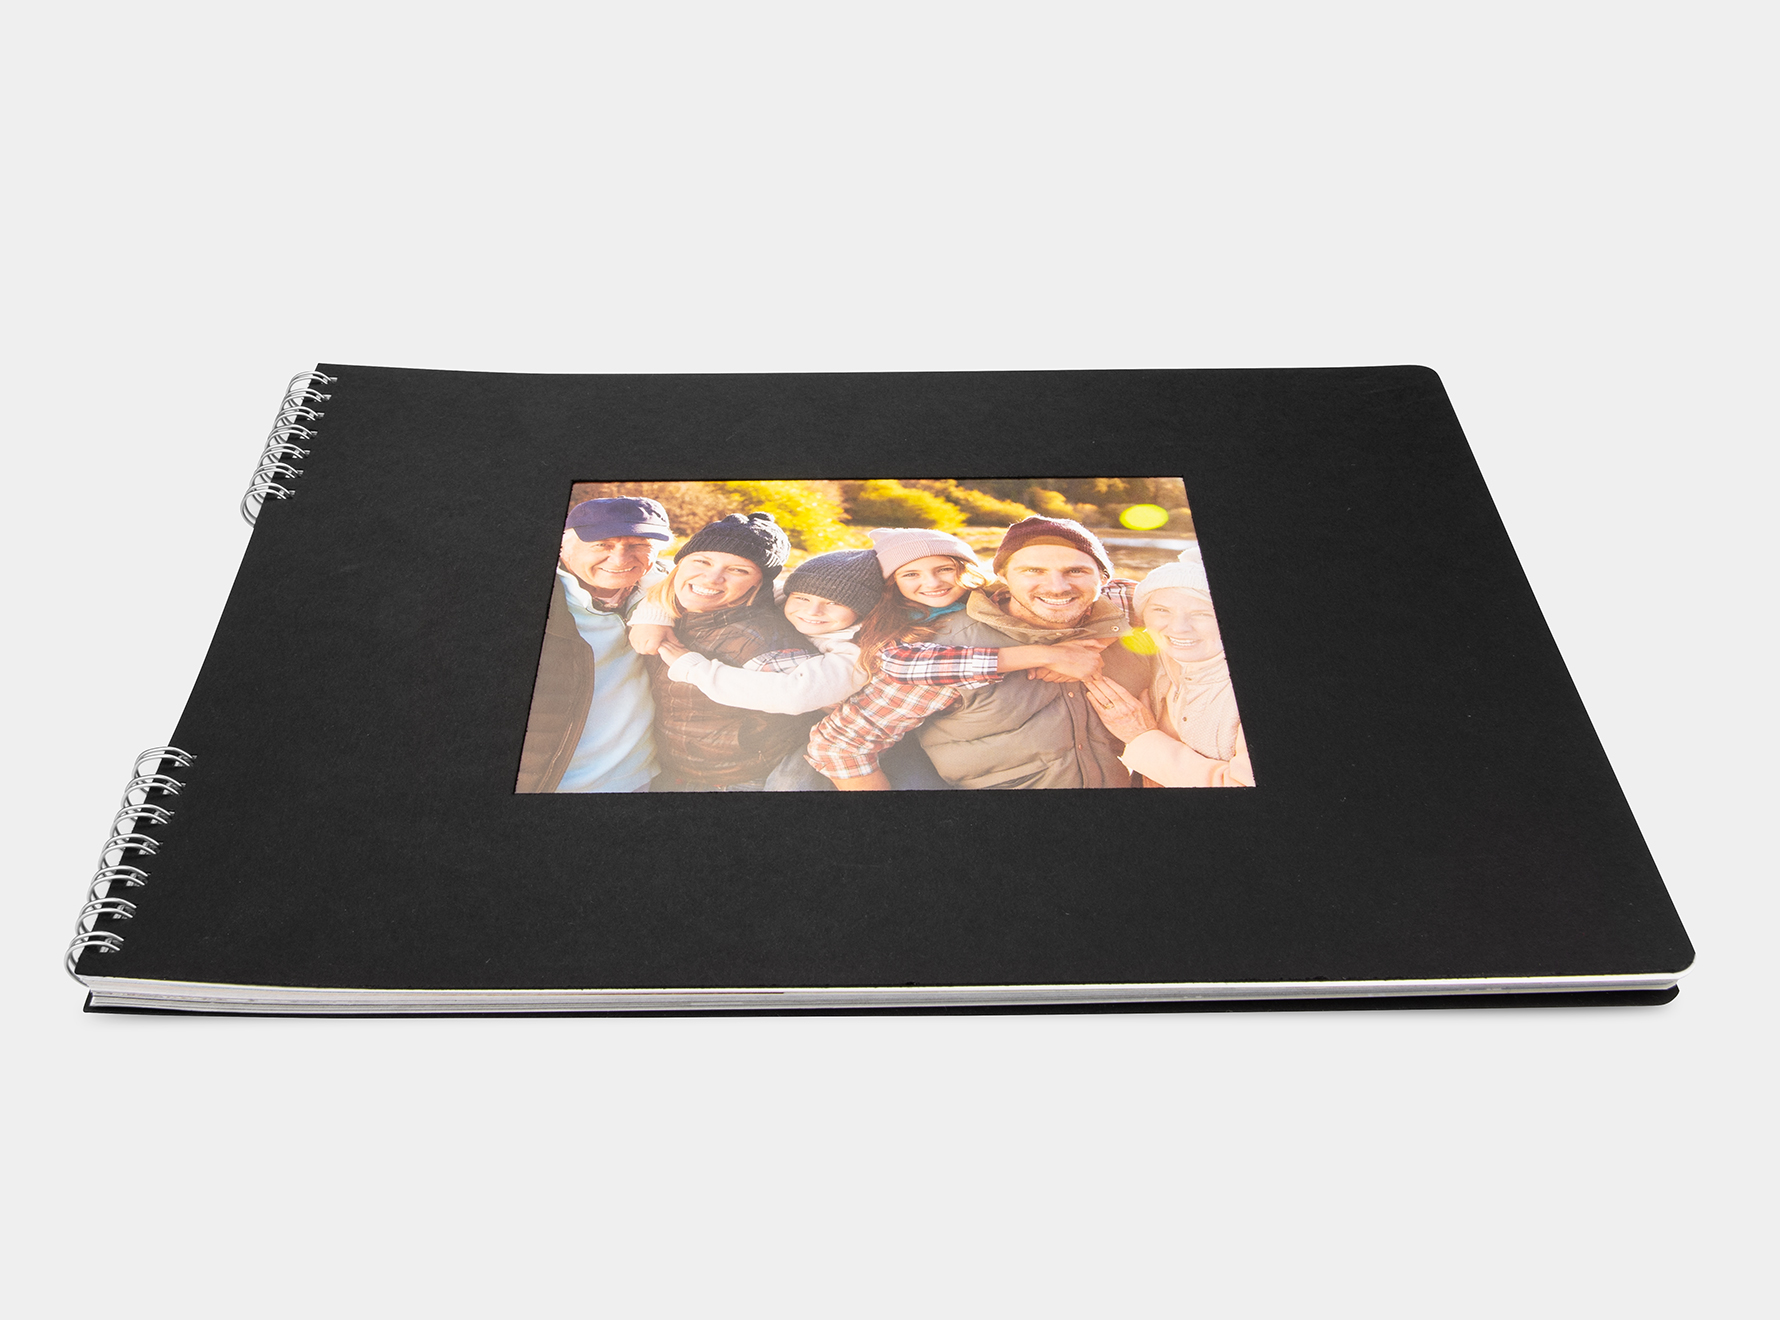 Lanpn Album de Fotos 10x15 600, Grande Lino Album para Photos